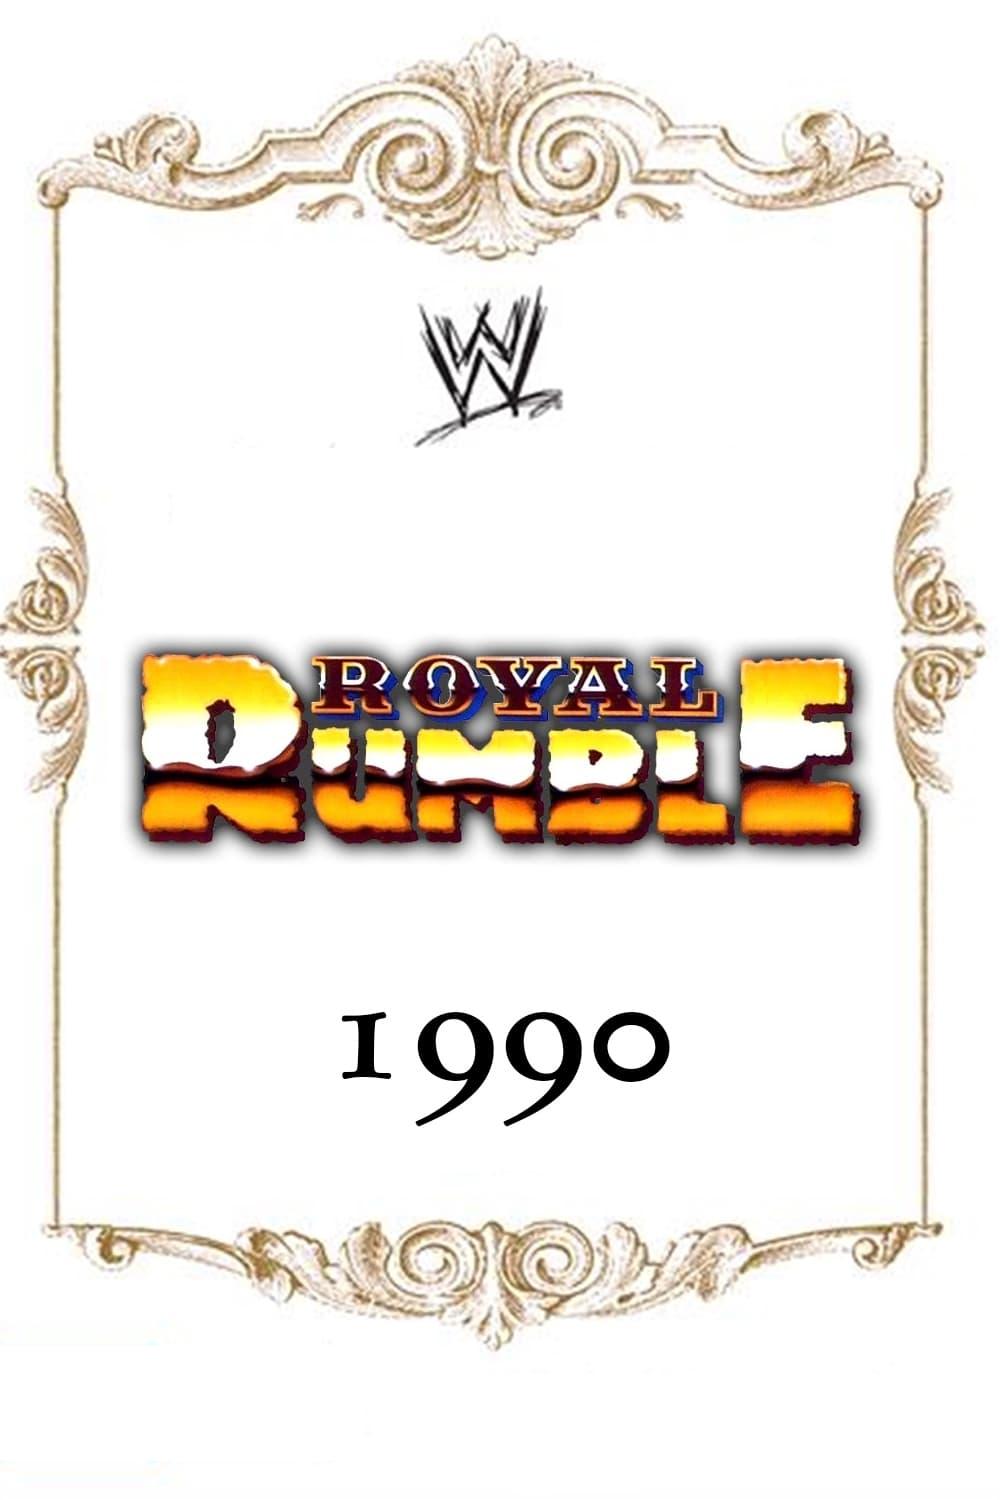 WWE Royal Rumble 1990 poster